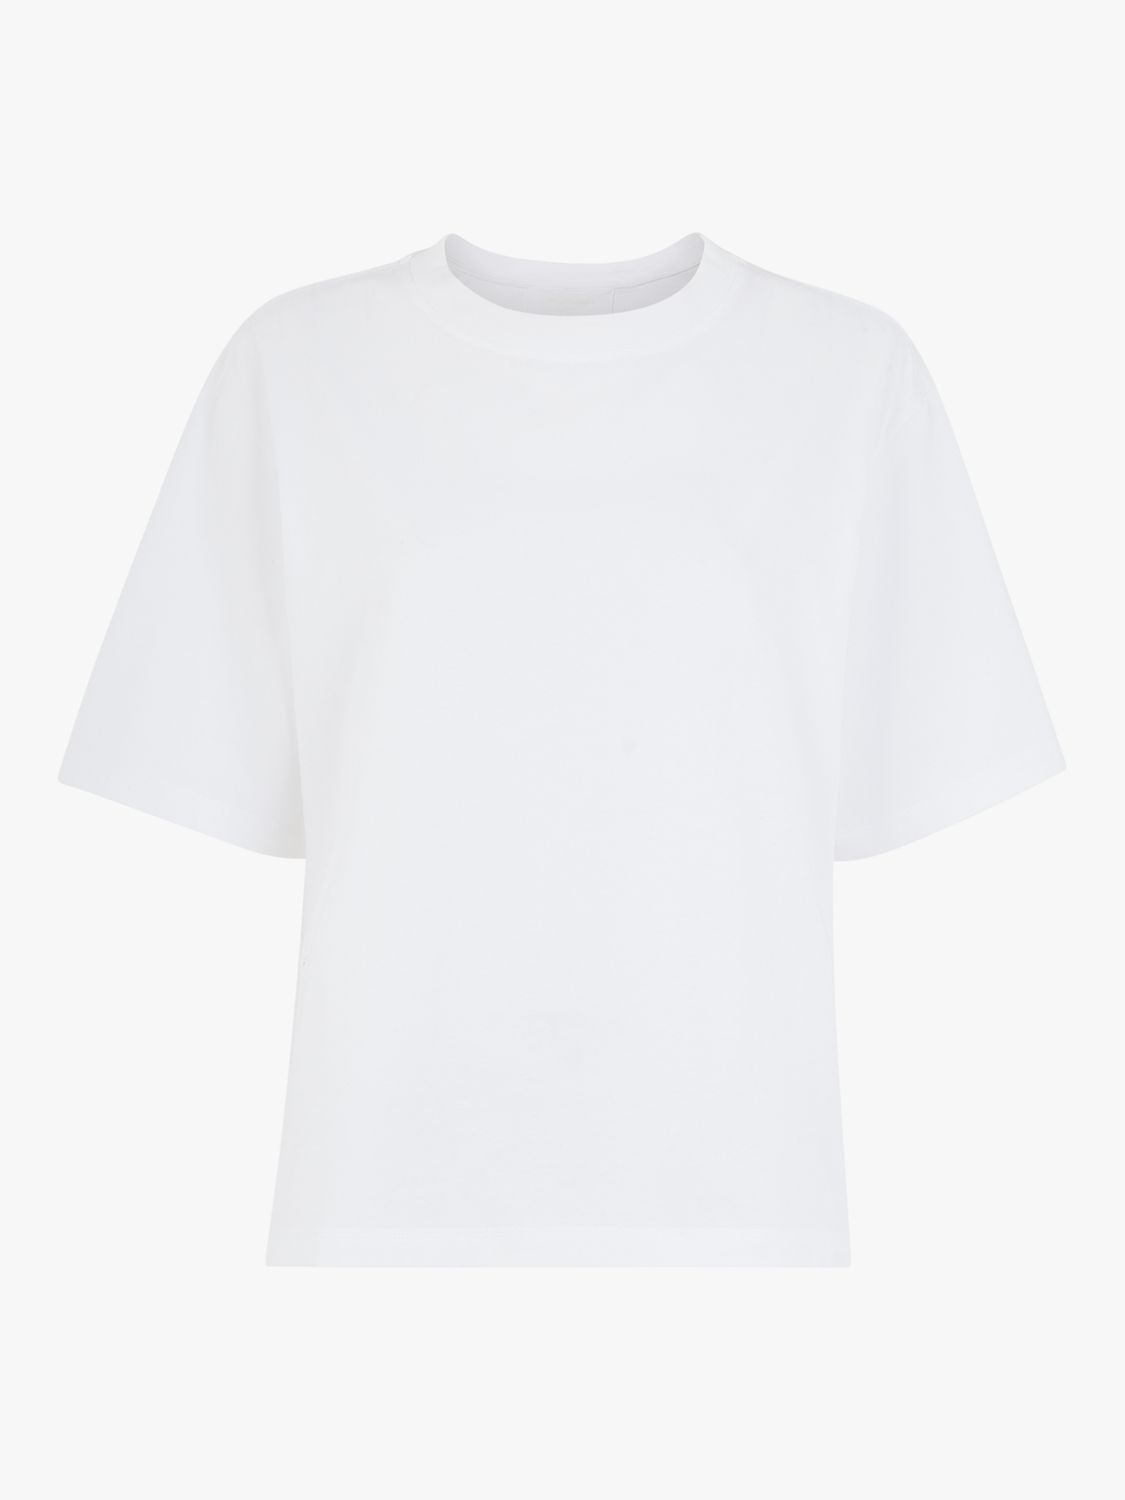 Whistles Boyfriend Oversized T-Shirt, White, XS